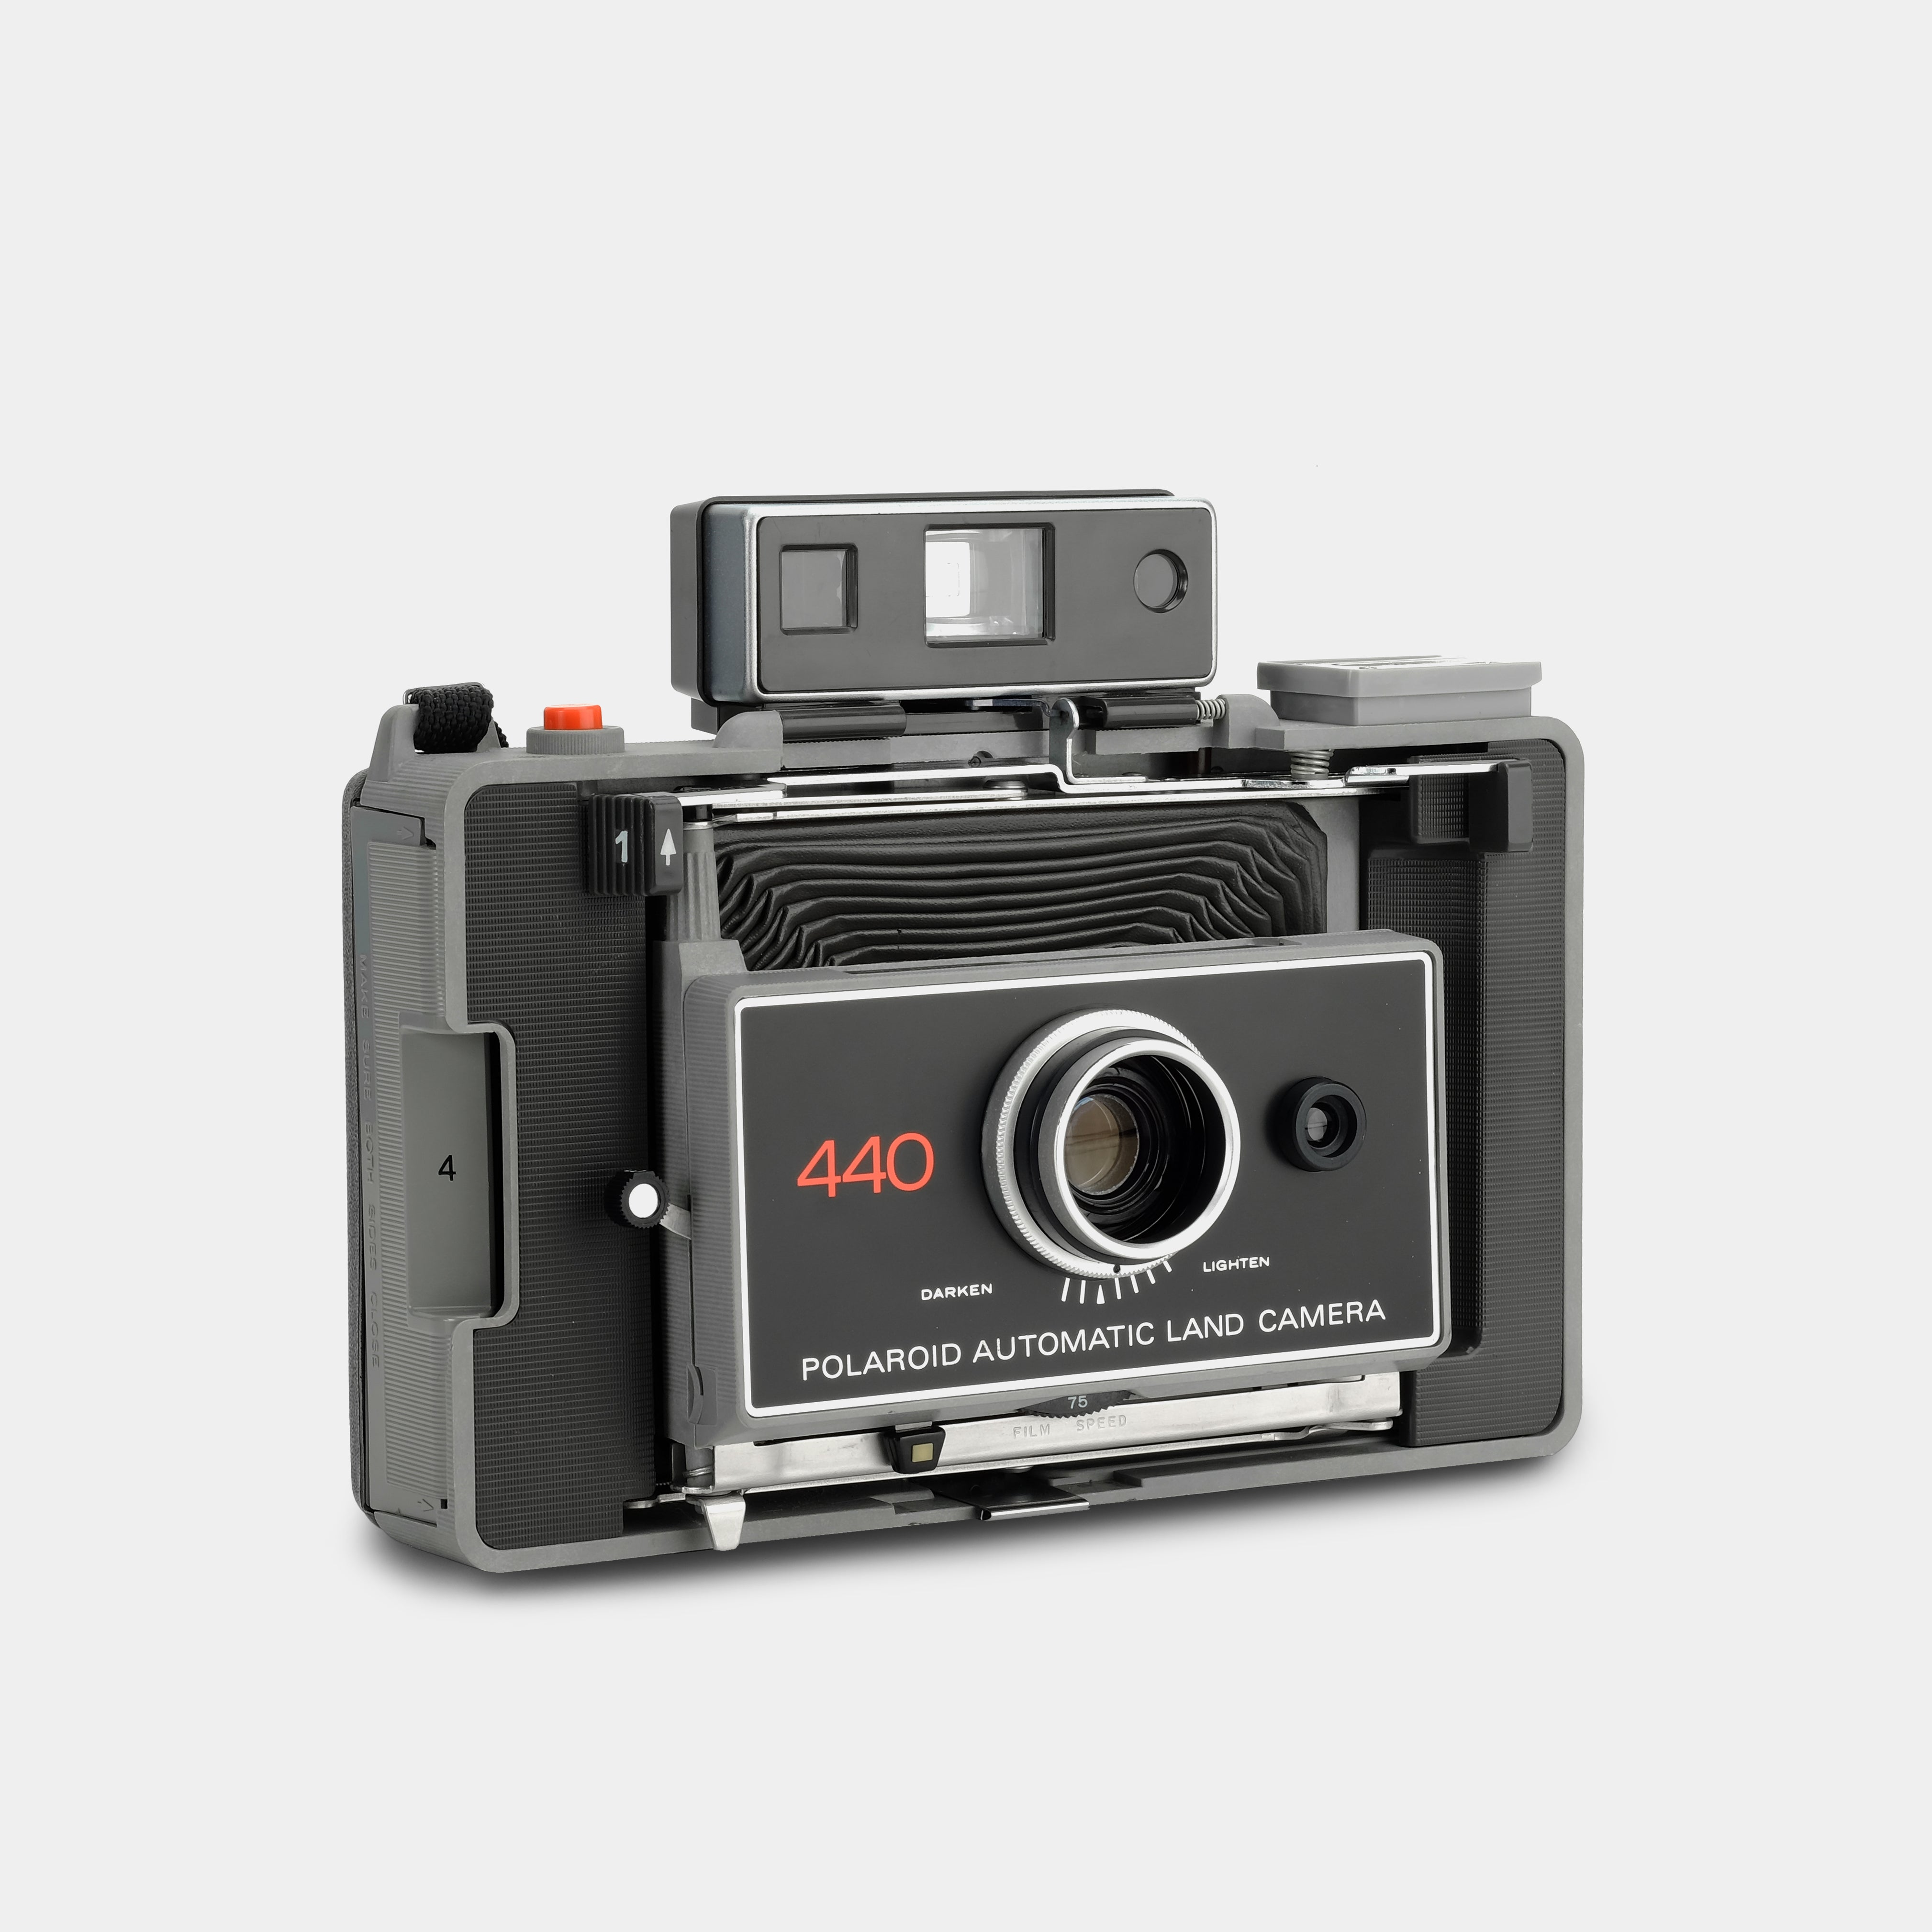 Polaroid Model 440 Packfilm Land Camera